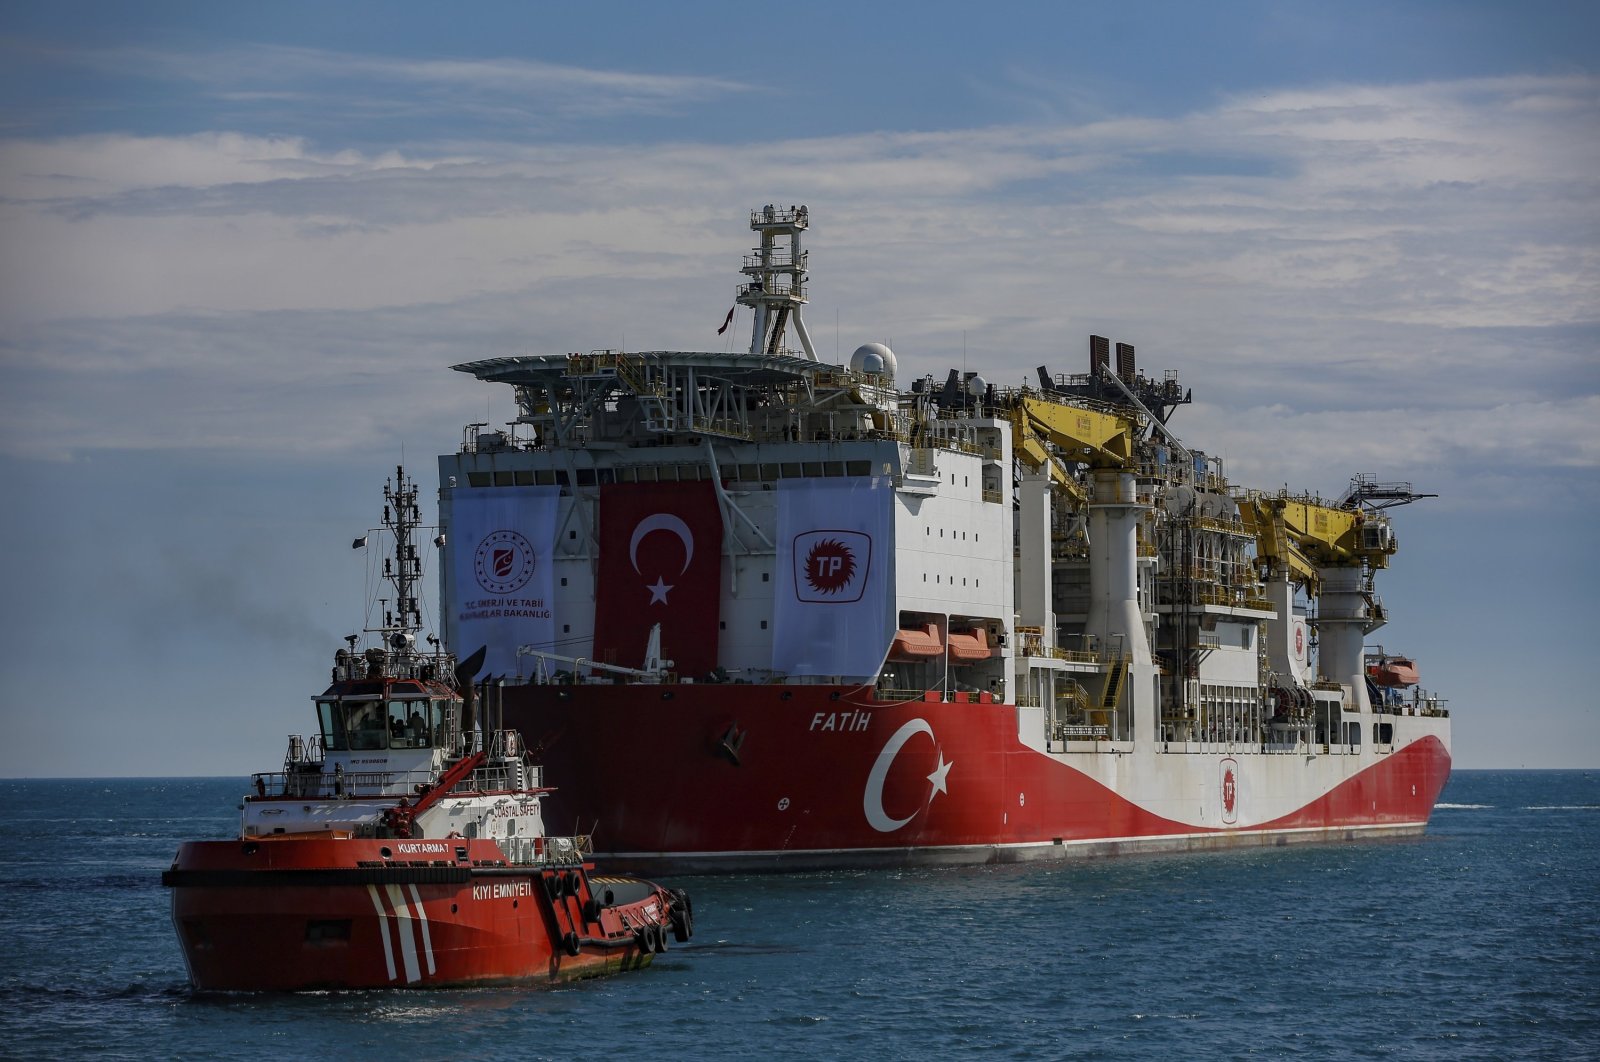 Türkiye’s drillship, Fatih, sails through the Bosporus toward the Black Sea, in Istanbul, Türkiye, May 29, 2020. (AP Photo)